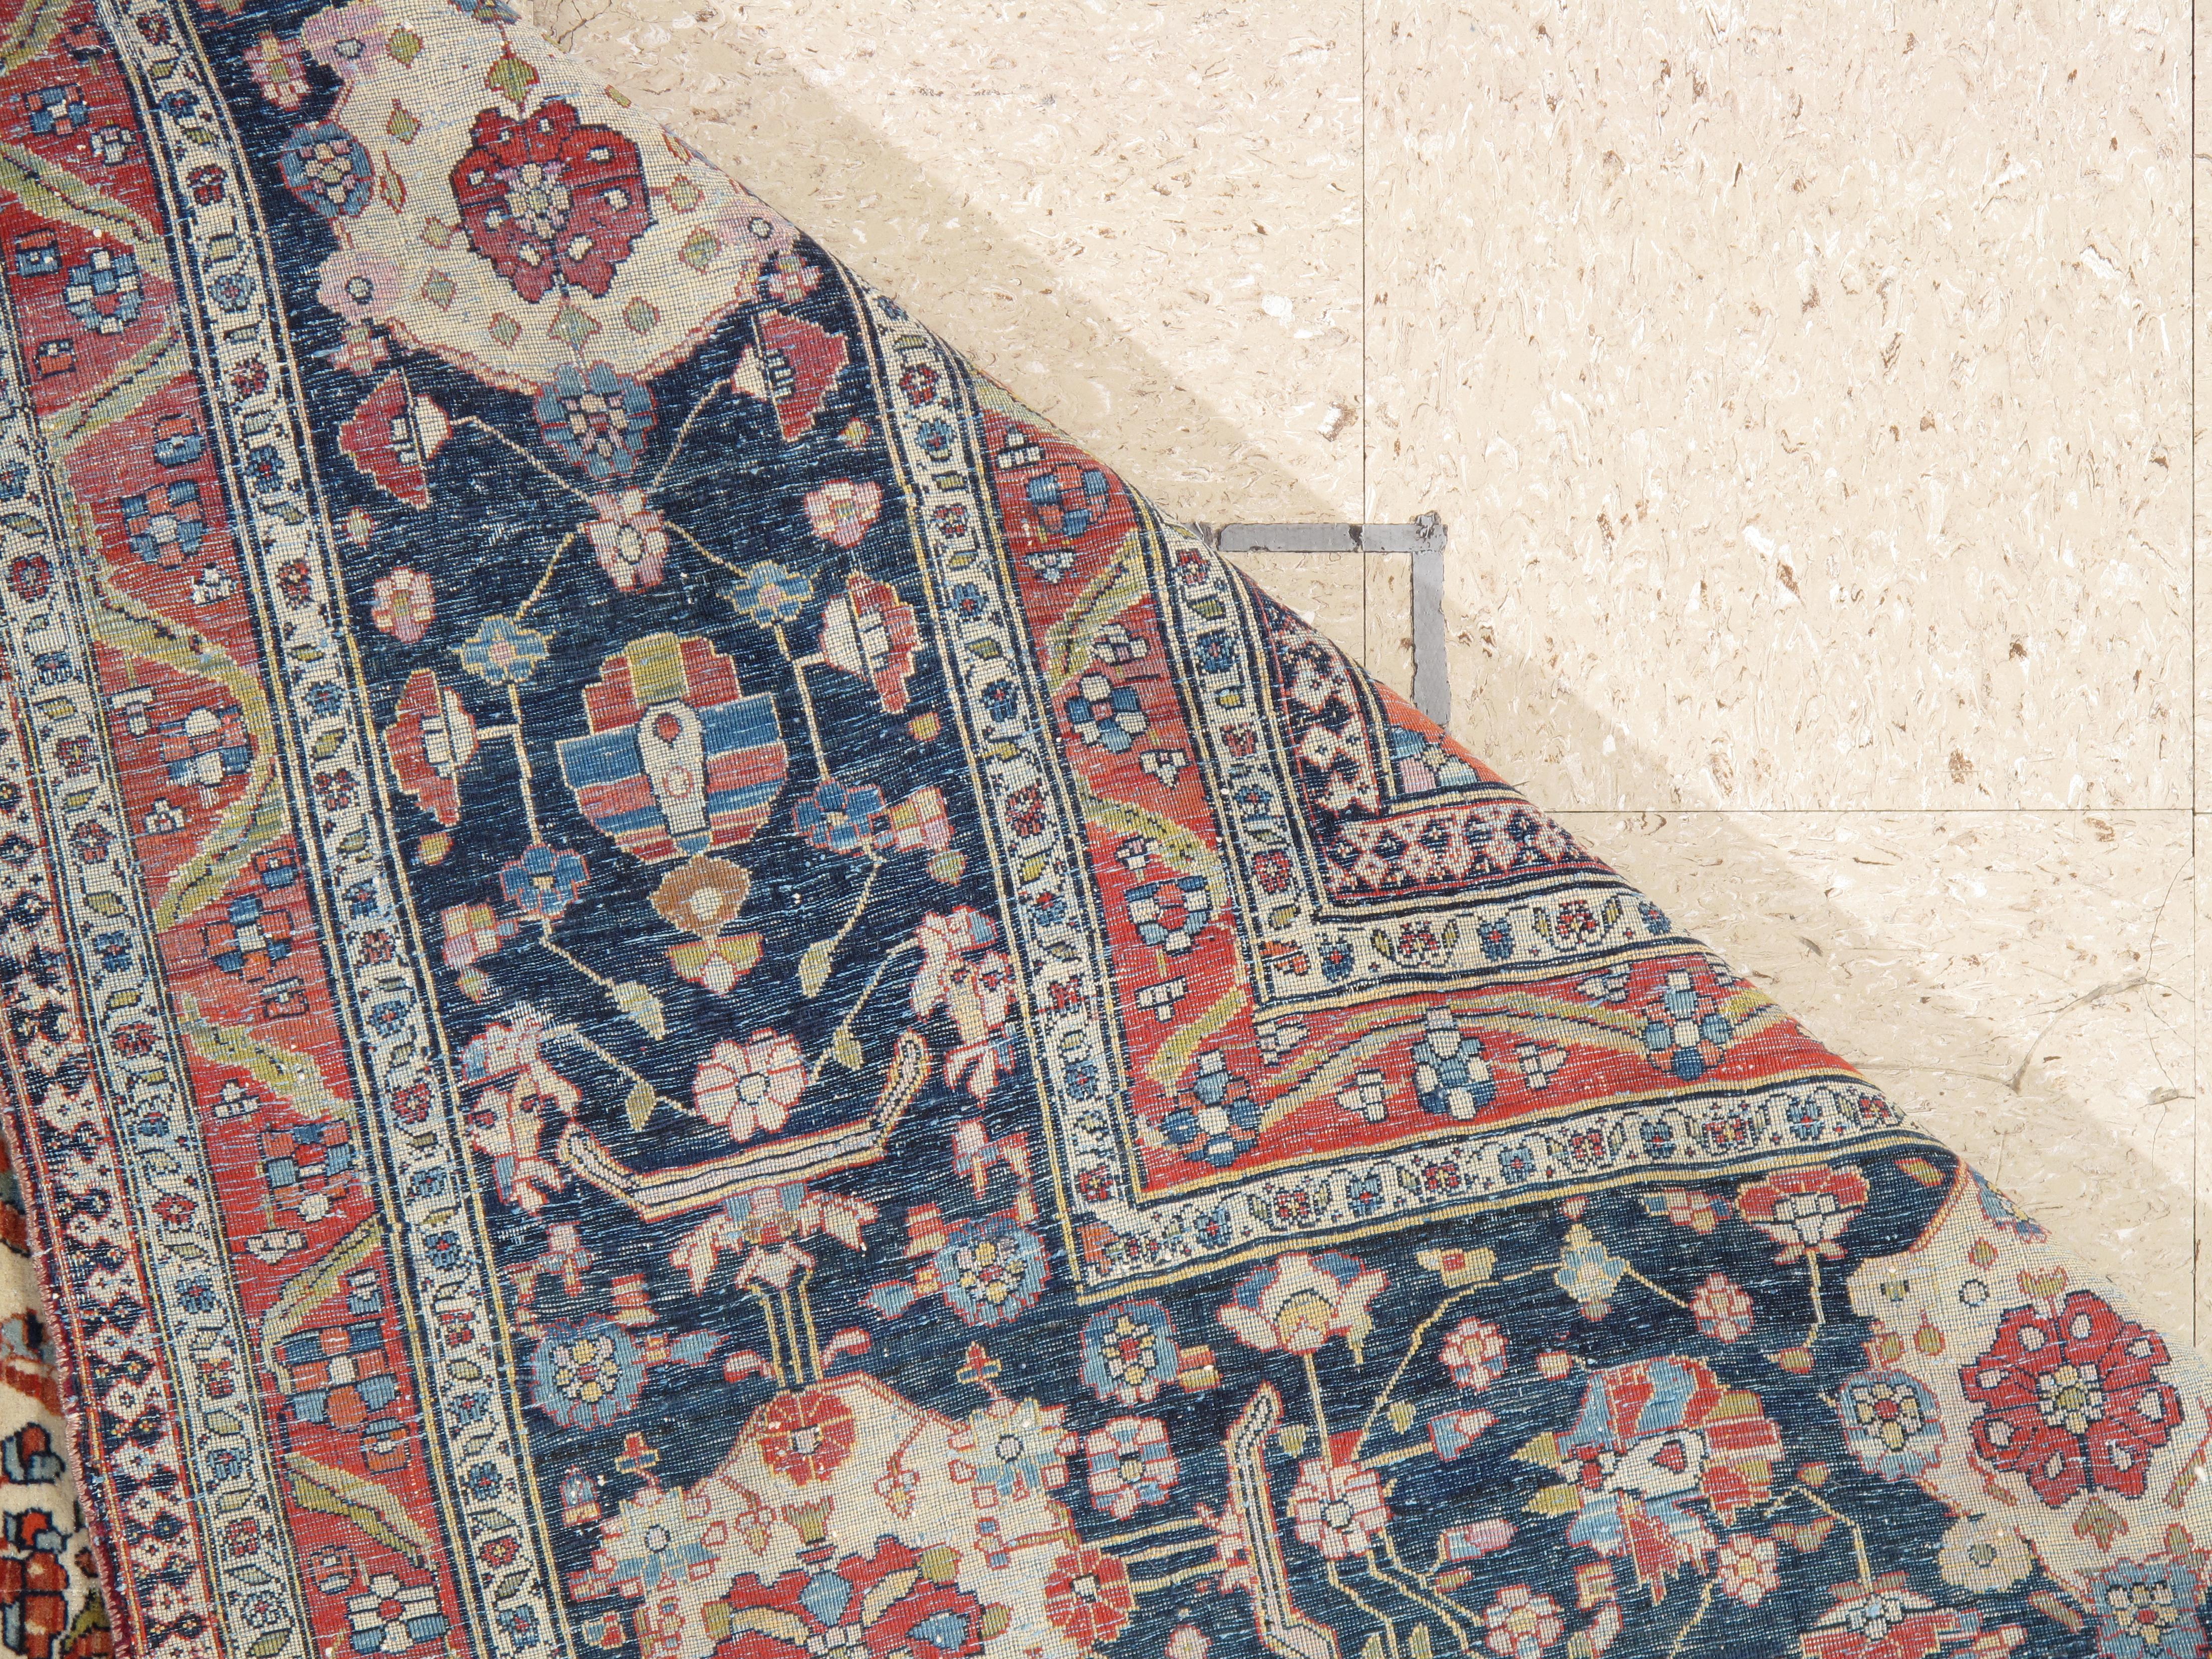 Antique Persian Mohtasham Kashan Carpet, Traditional, Ivory, Blue, Green, Reds 10